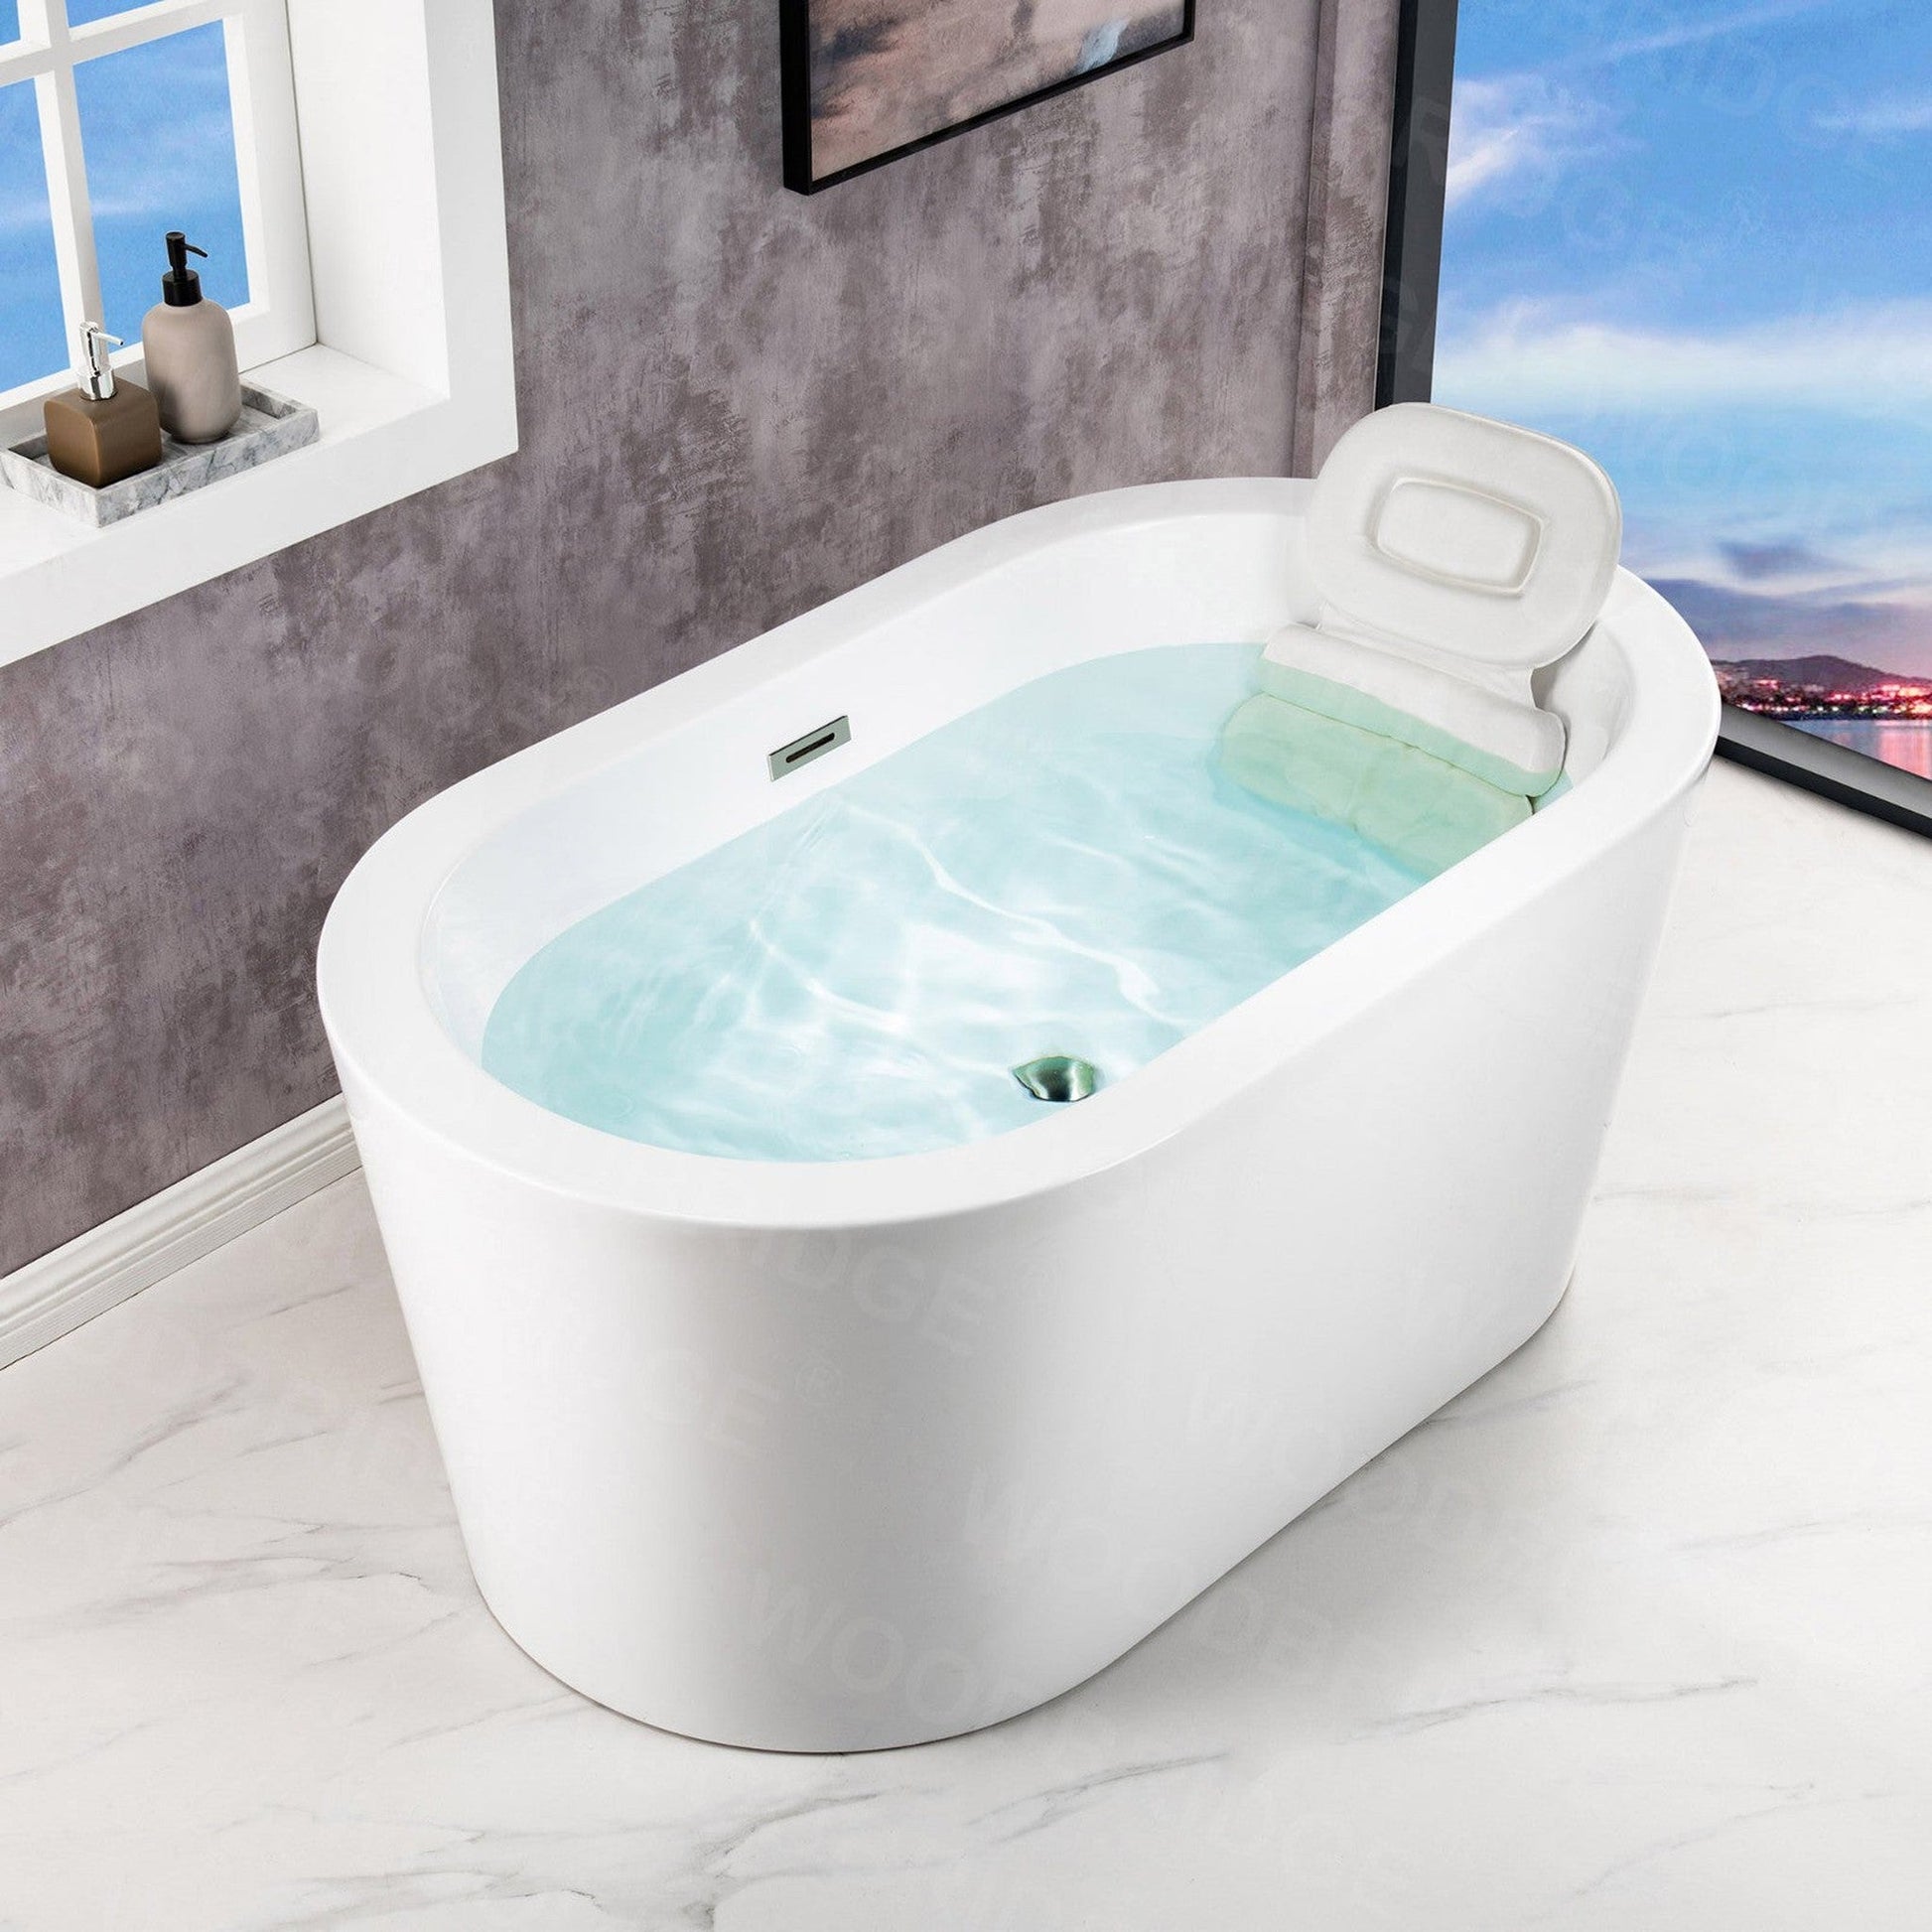 WoodBridge BTA0088 56" White Acrylic Freestanding Soaking Bathtub With Chrome Drain, Overflow, F0021 Tub Filler and Caddy Tray